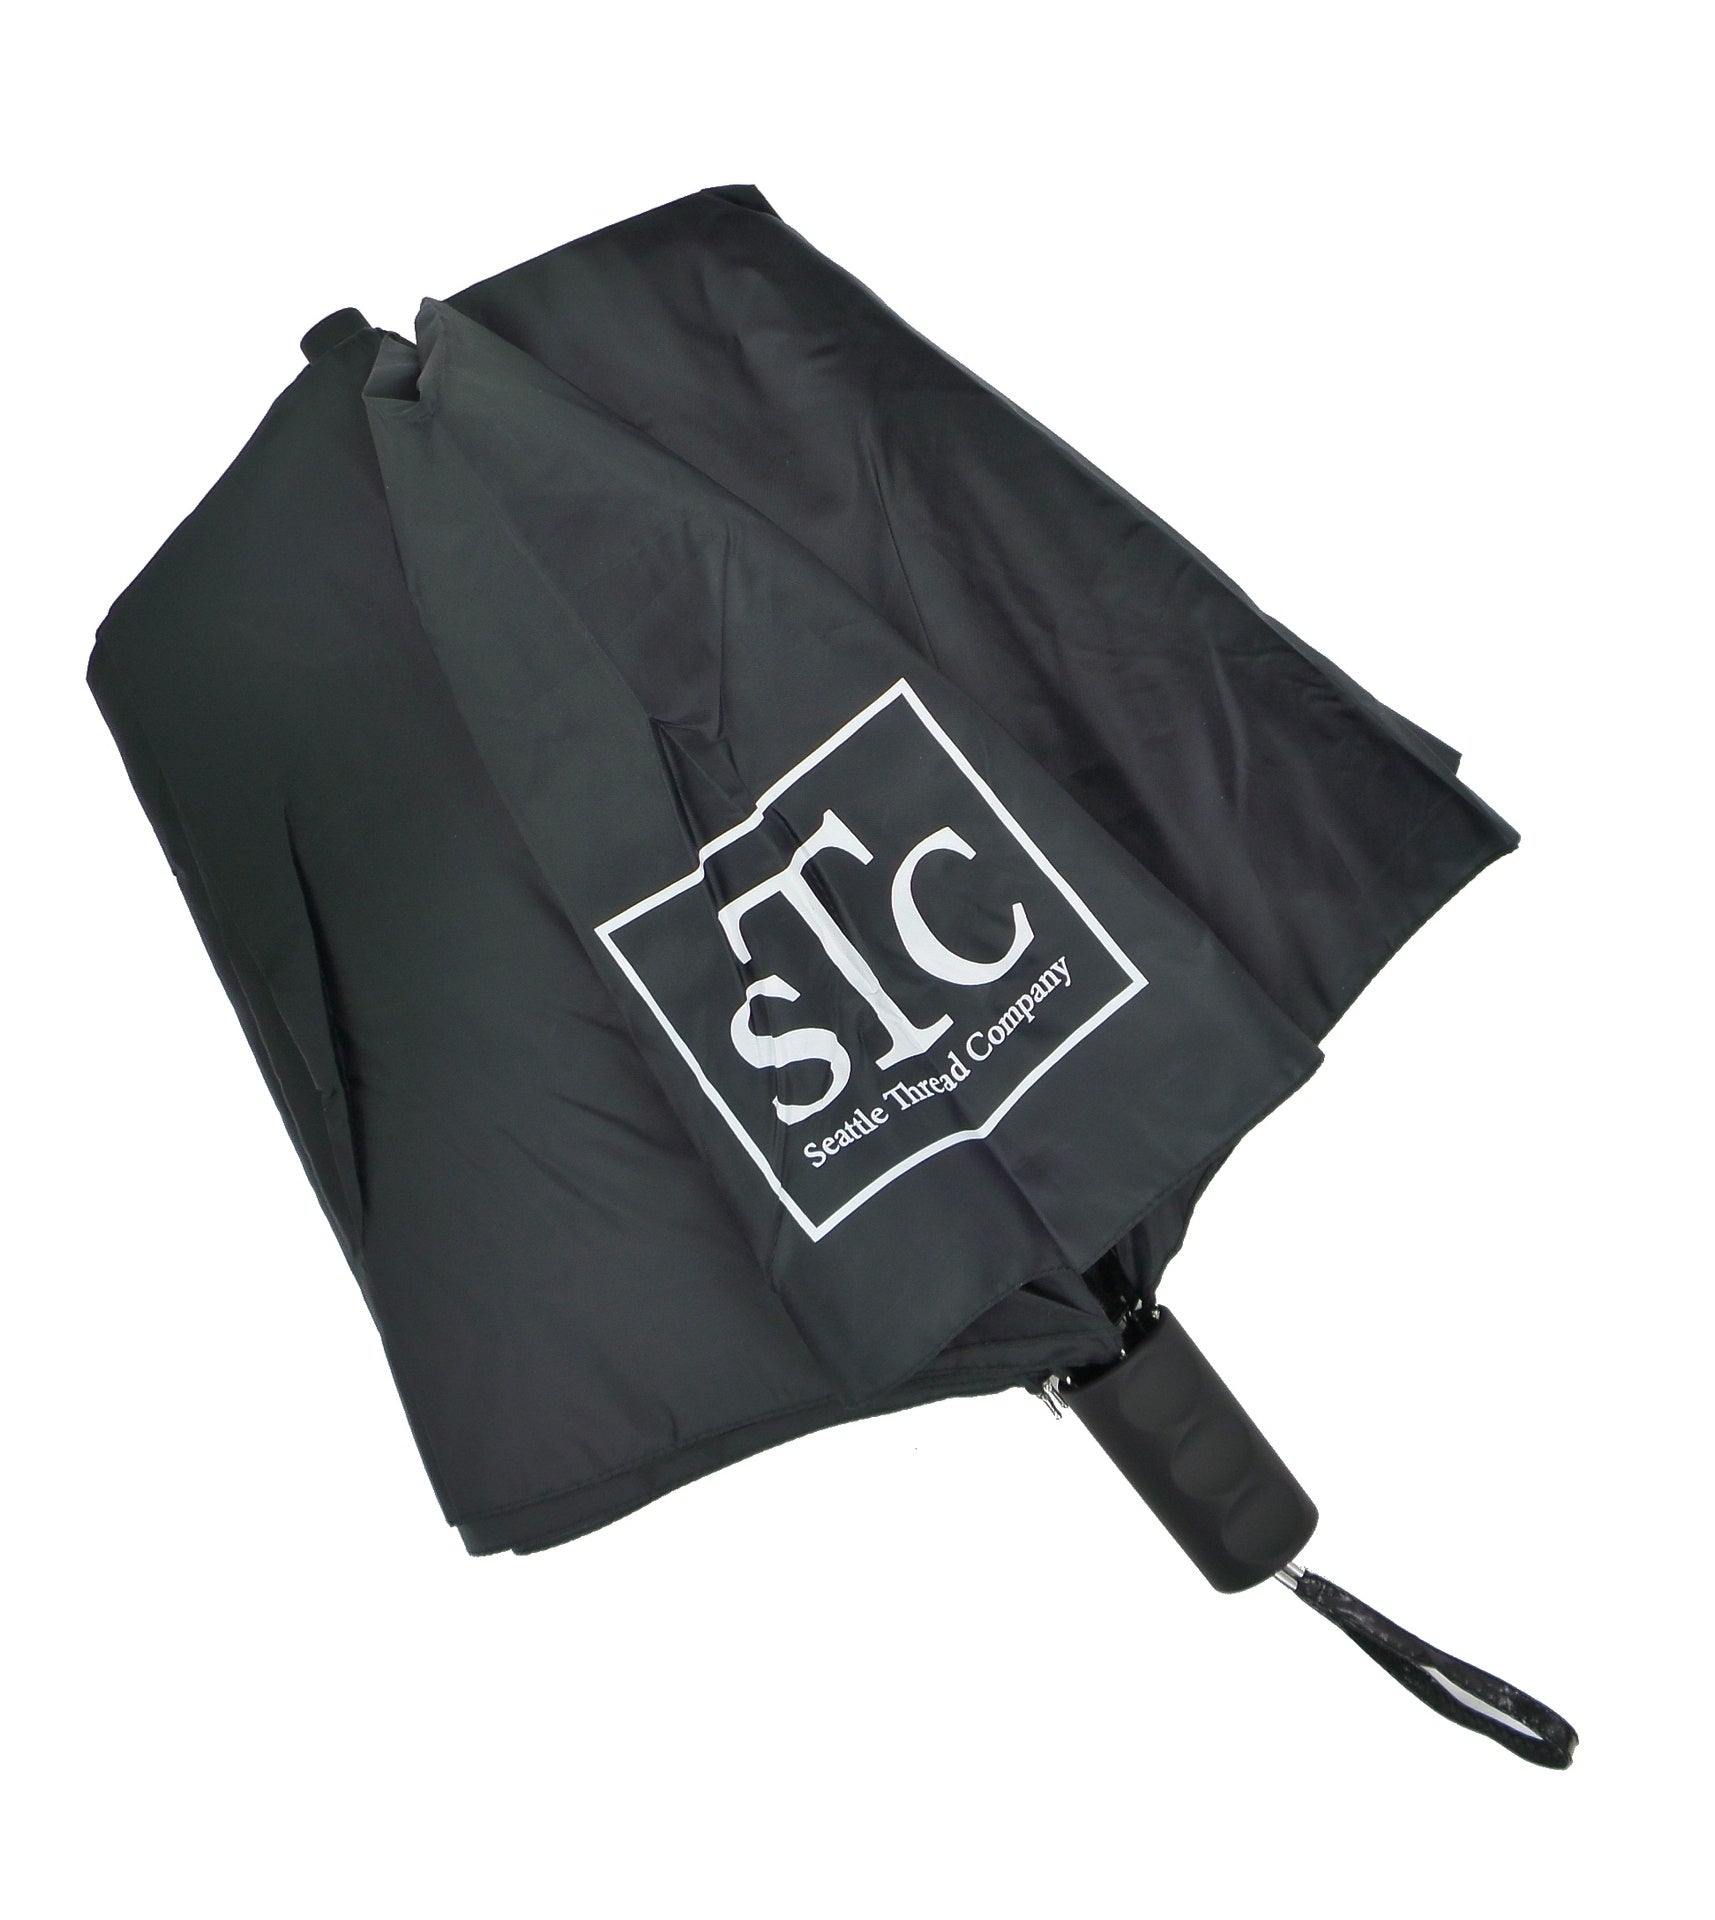 Seattle Thread Company Umbrella